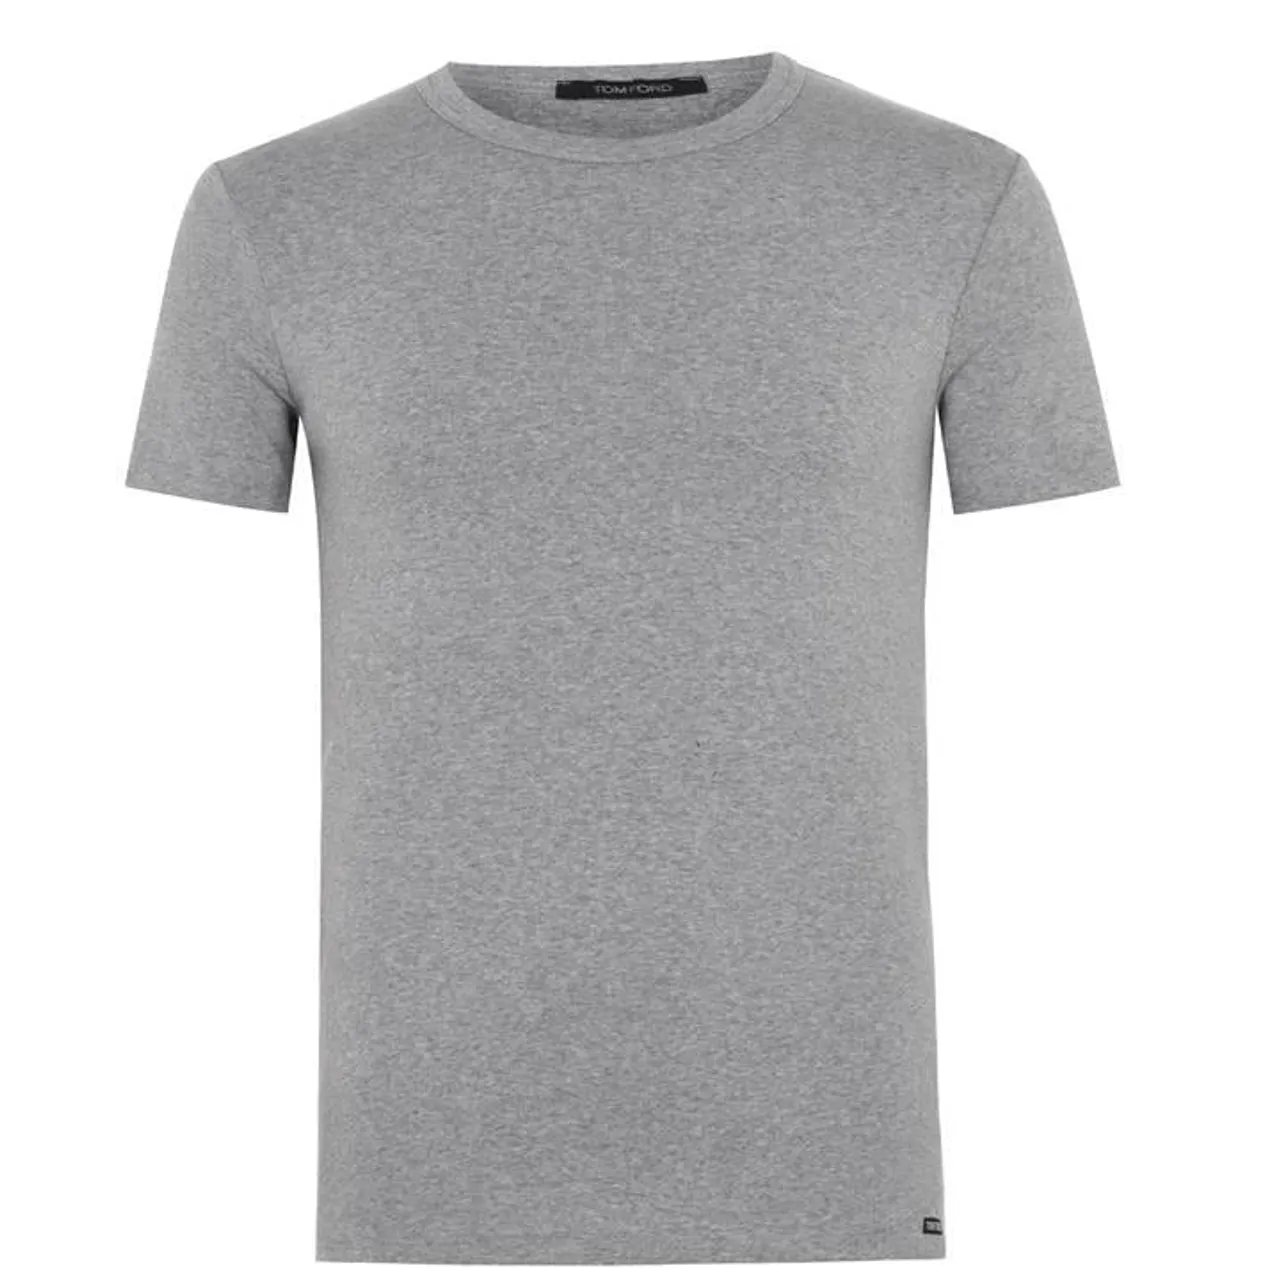 TOM FORD Cotton Crew T-Shirt - Grey